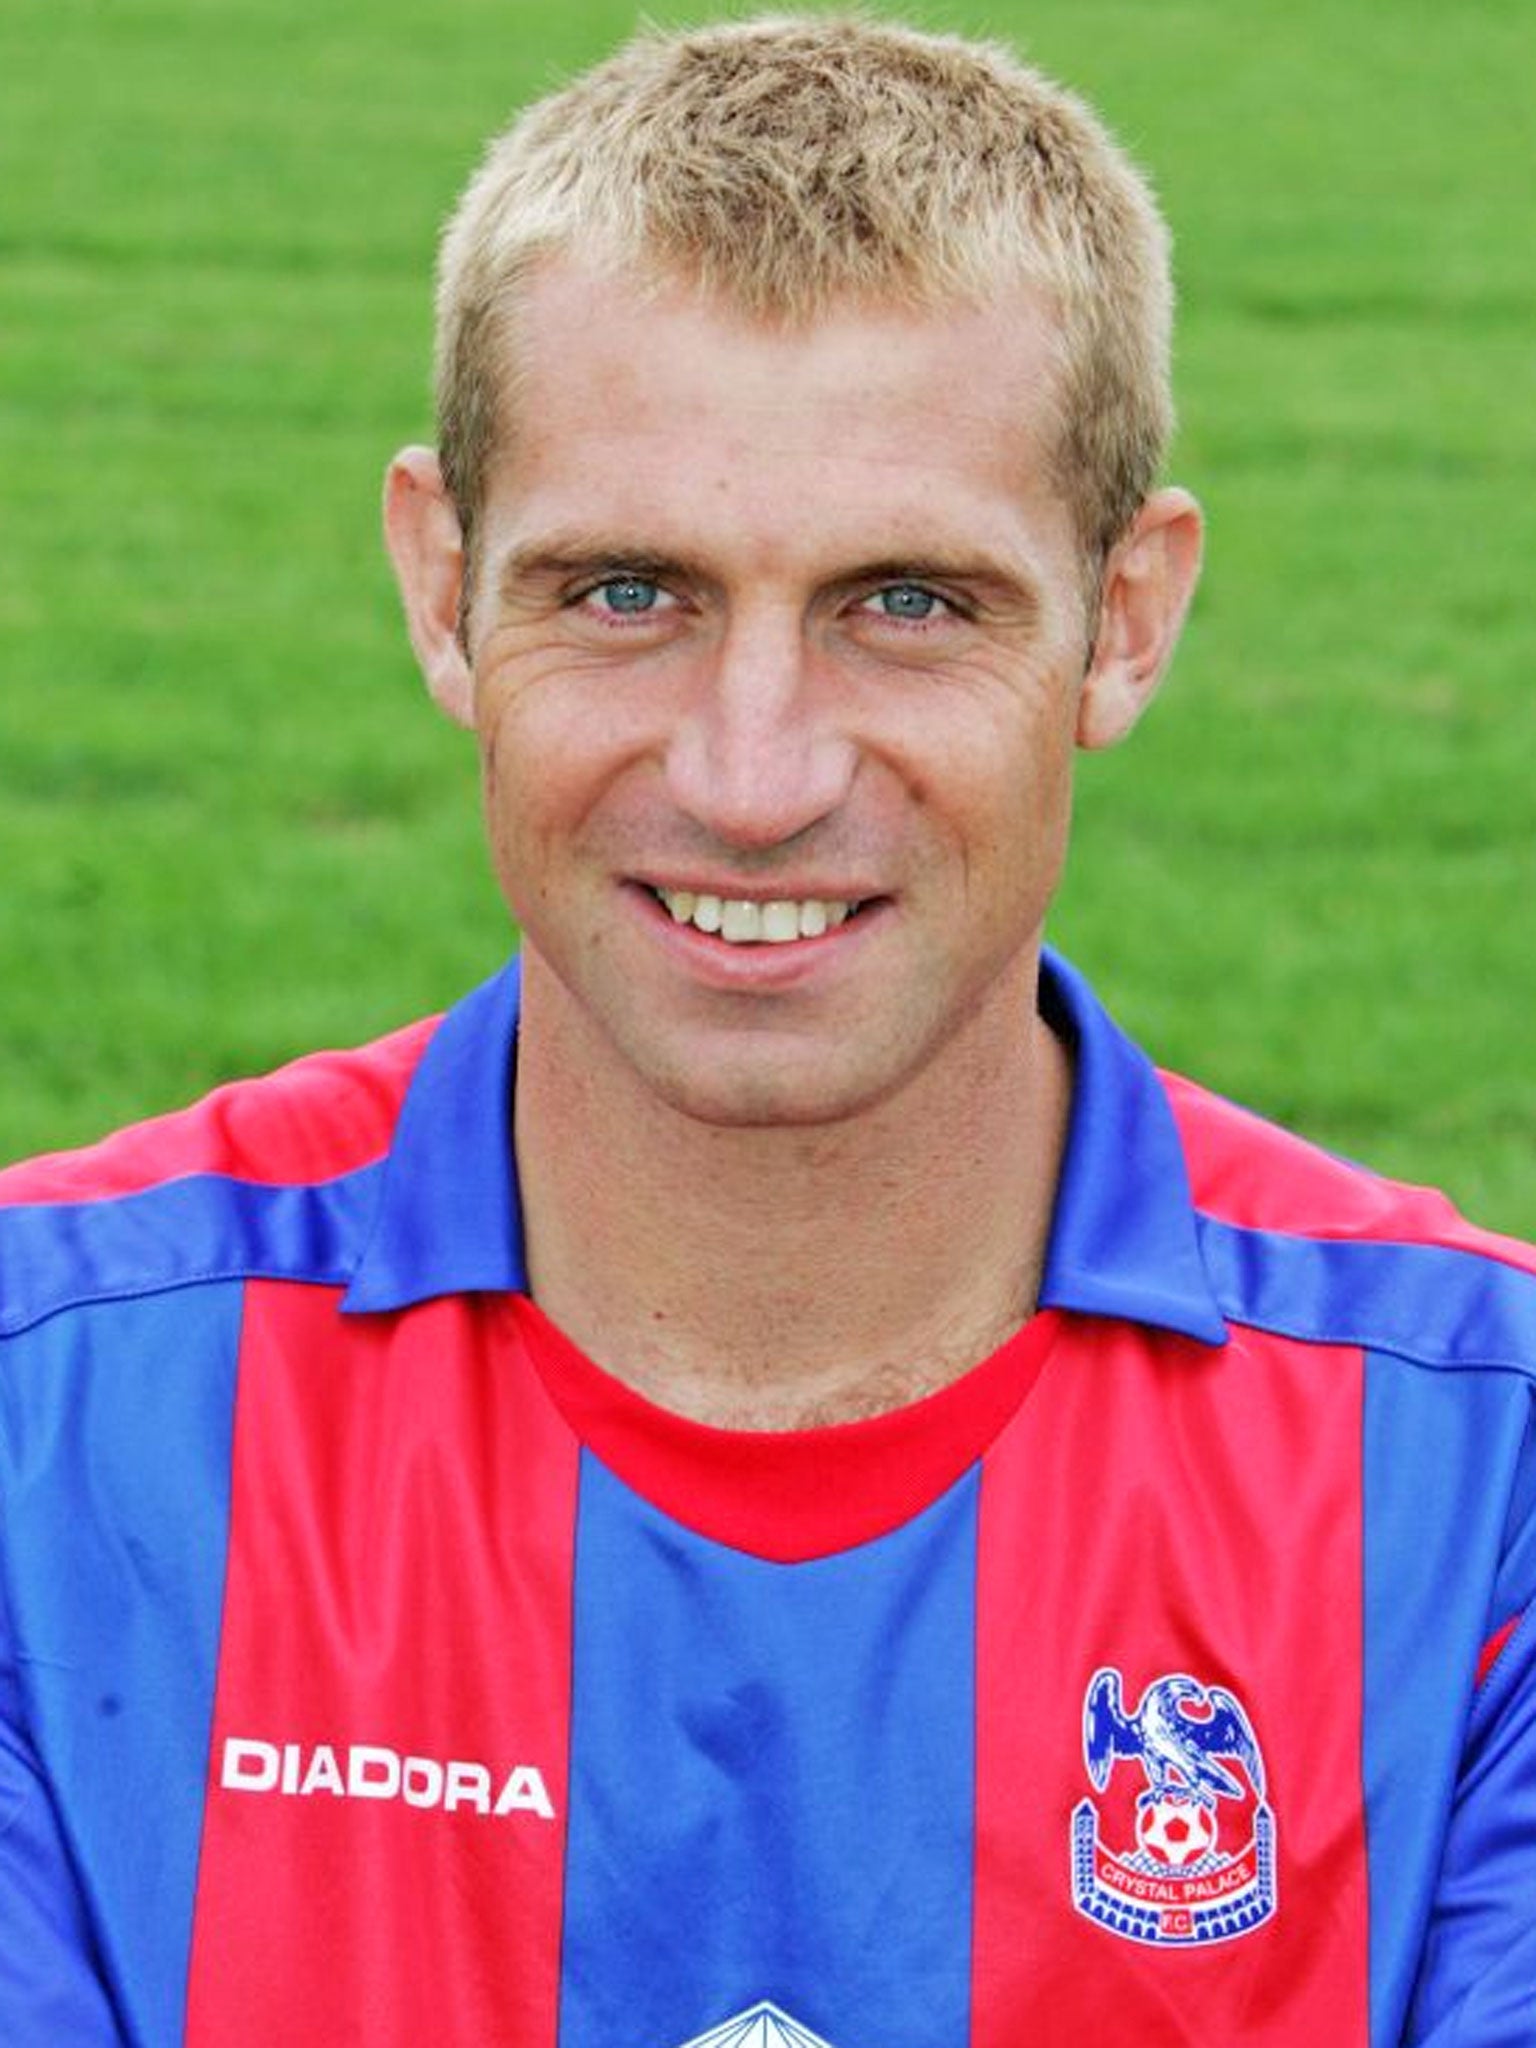 Professional footballer James Scowcroft